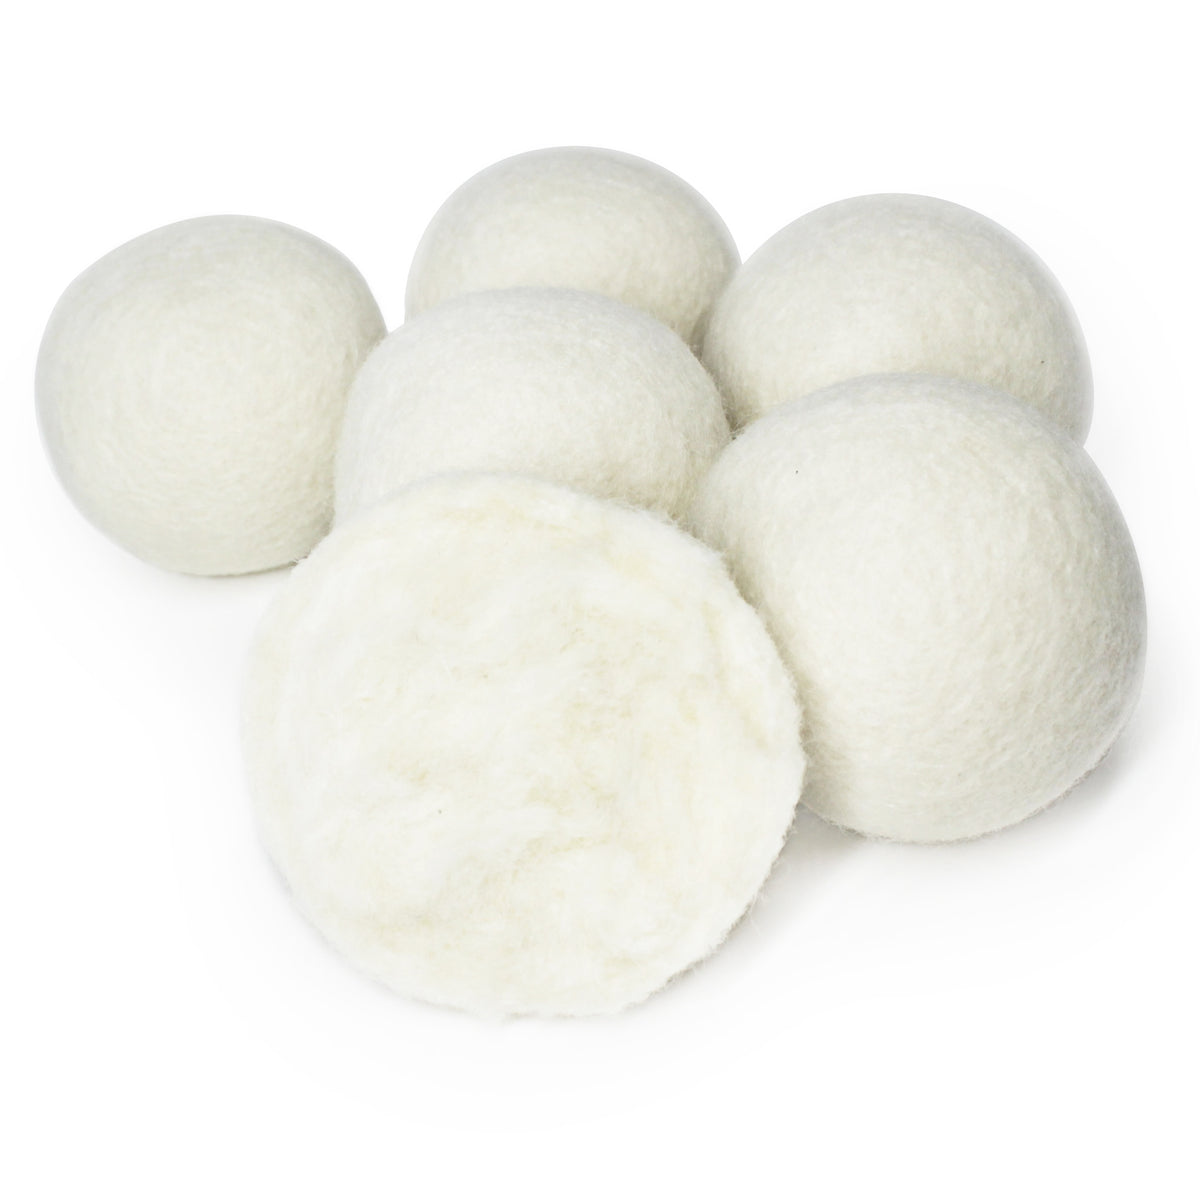 Heritage Park Wool Dryer Balls - White / 6 pack